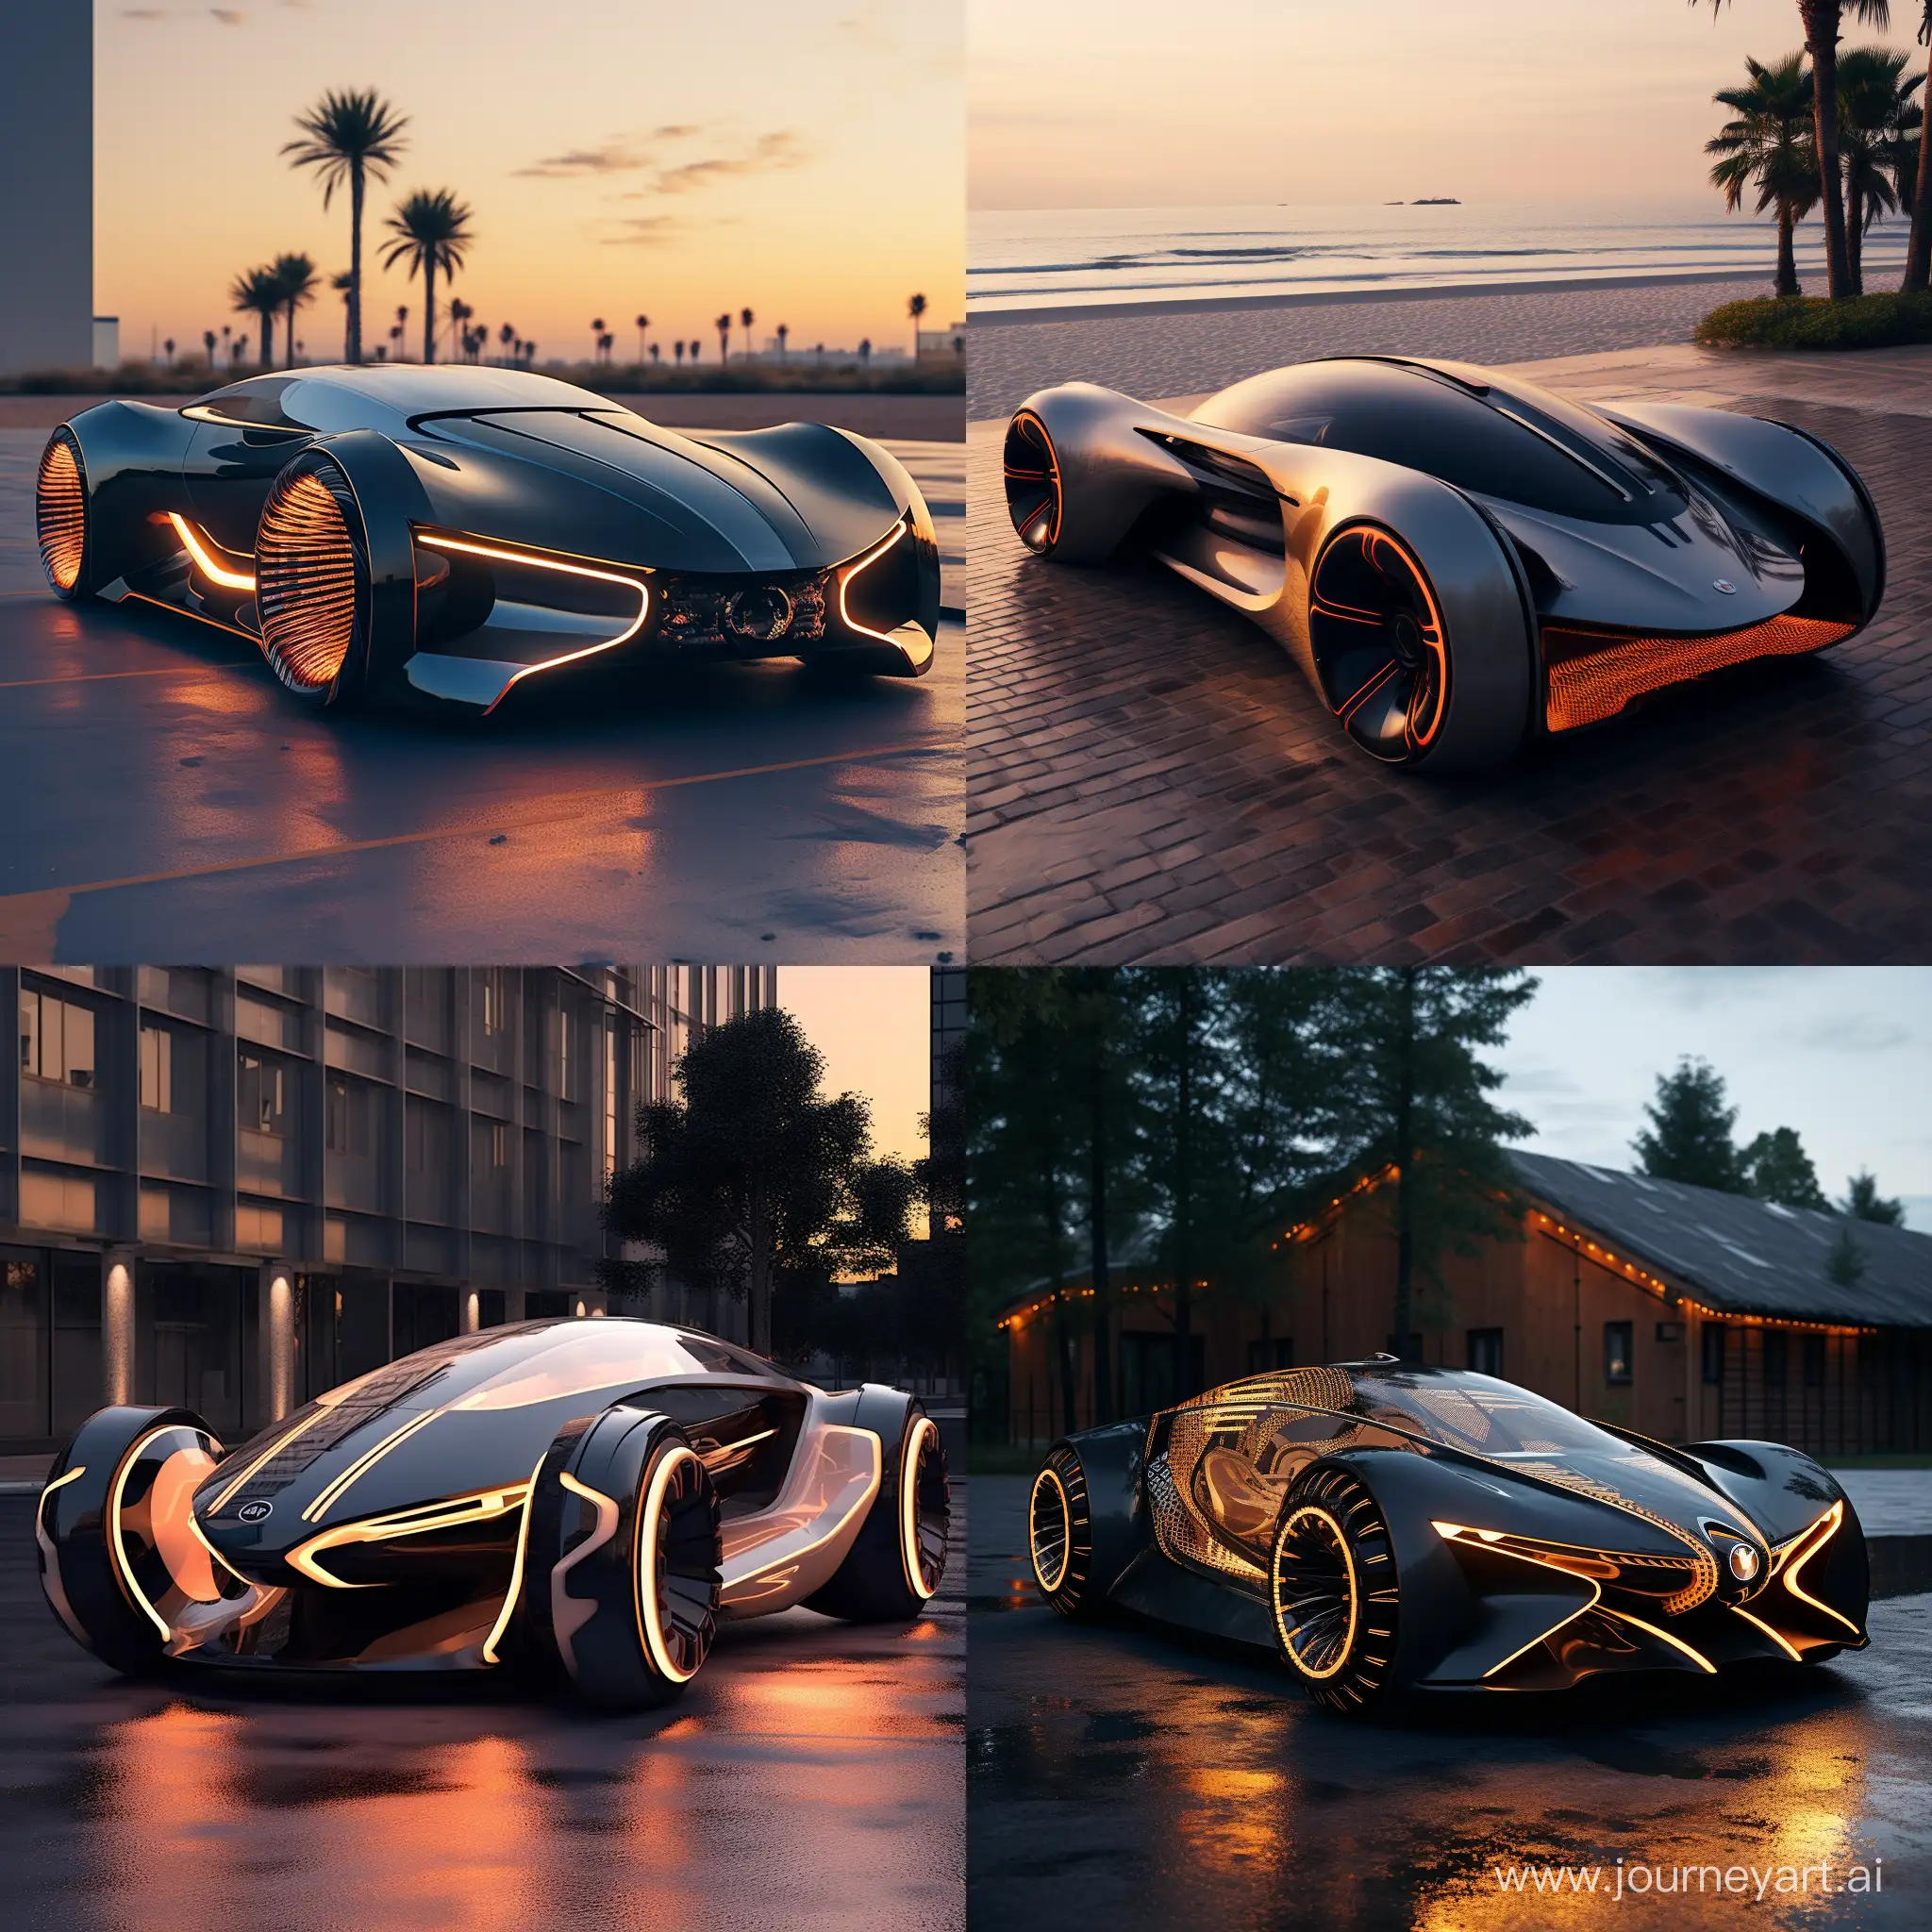 Futuristic-2100-Electric-Car-in-11-Scale-CuttingEdge-Automotive-Innovation